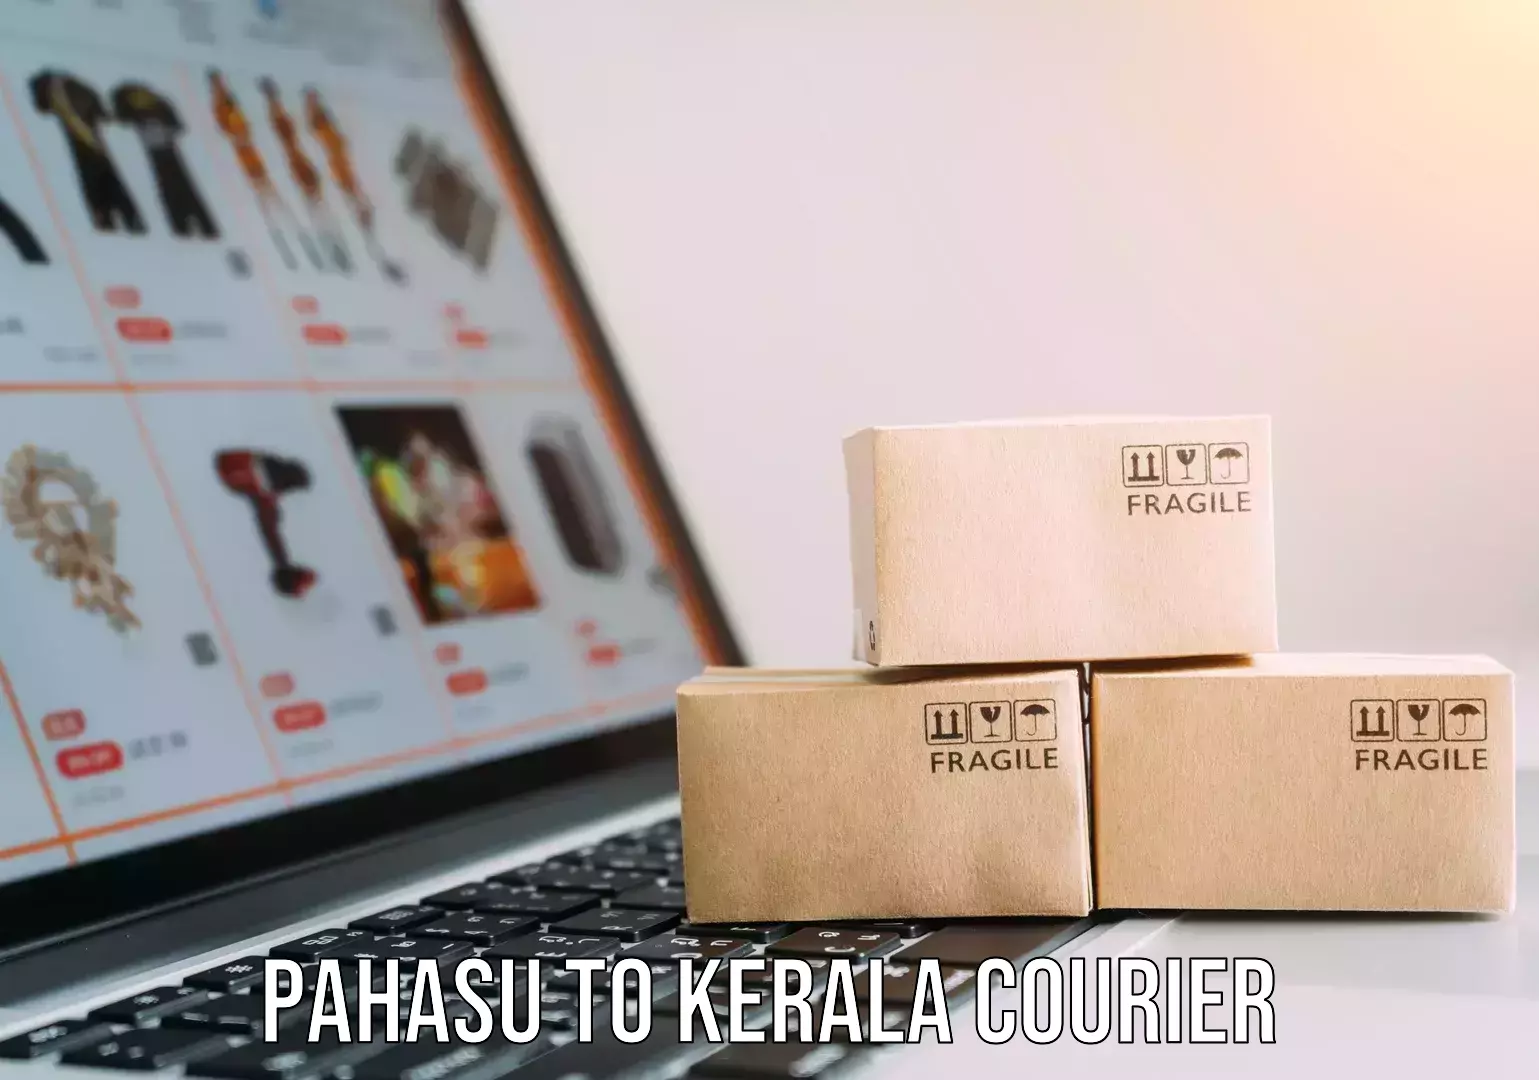 Home shifting experts Pahasu to Kerala